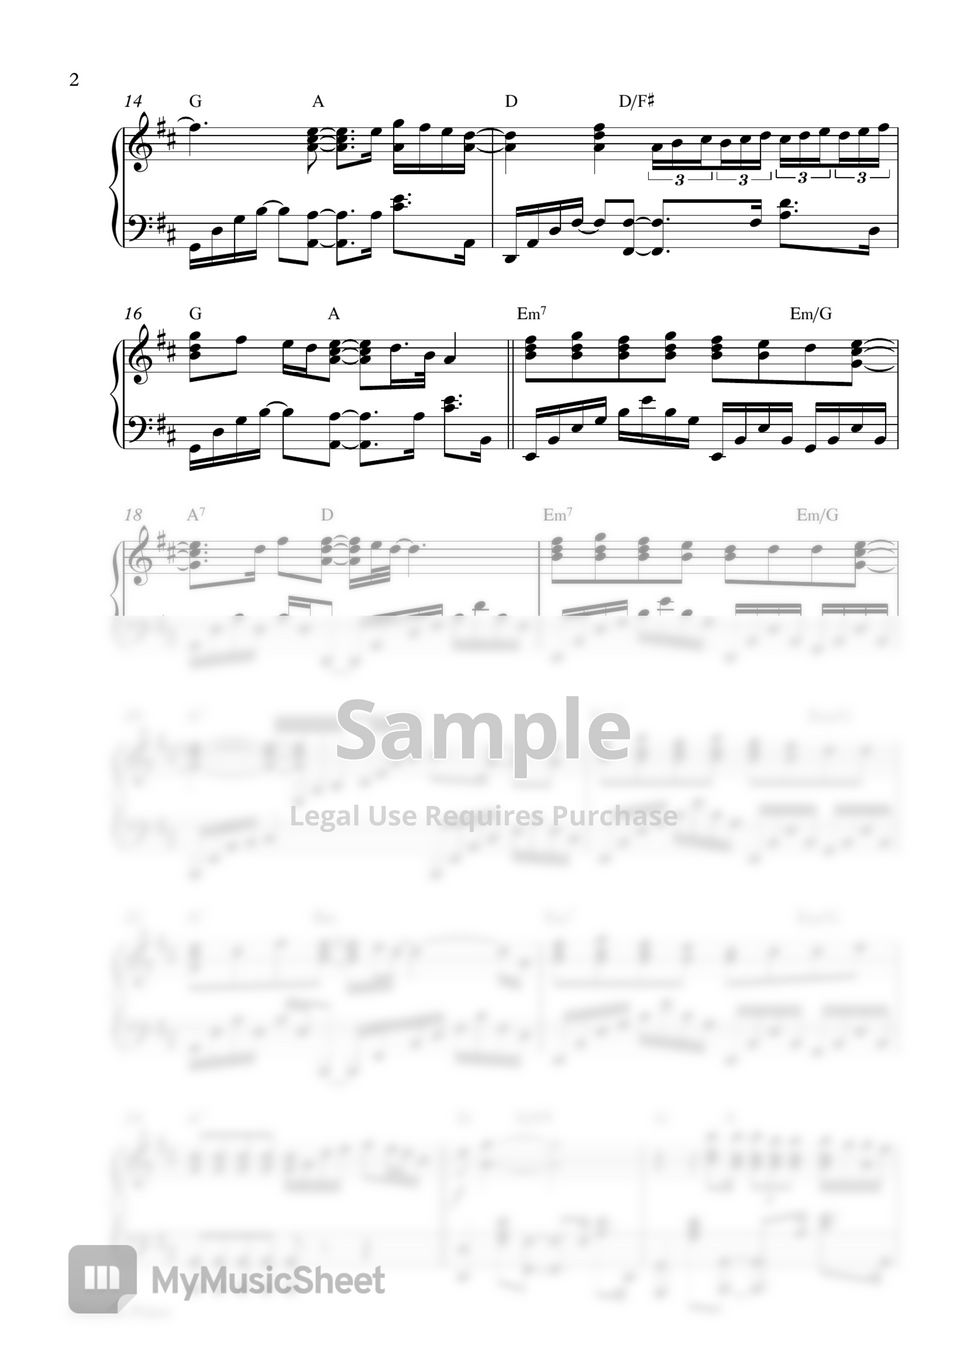 Ed Sheeran - Thinking Out Loud (Piano Sheet) by Pianella Piano